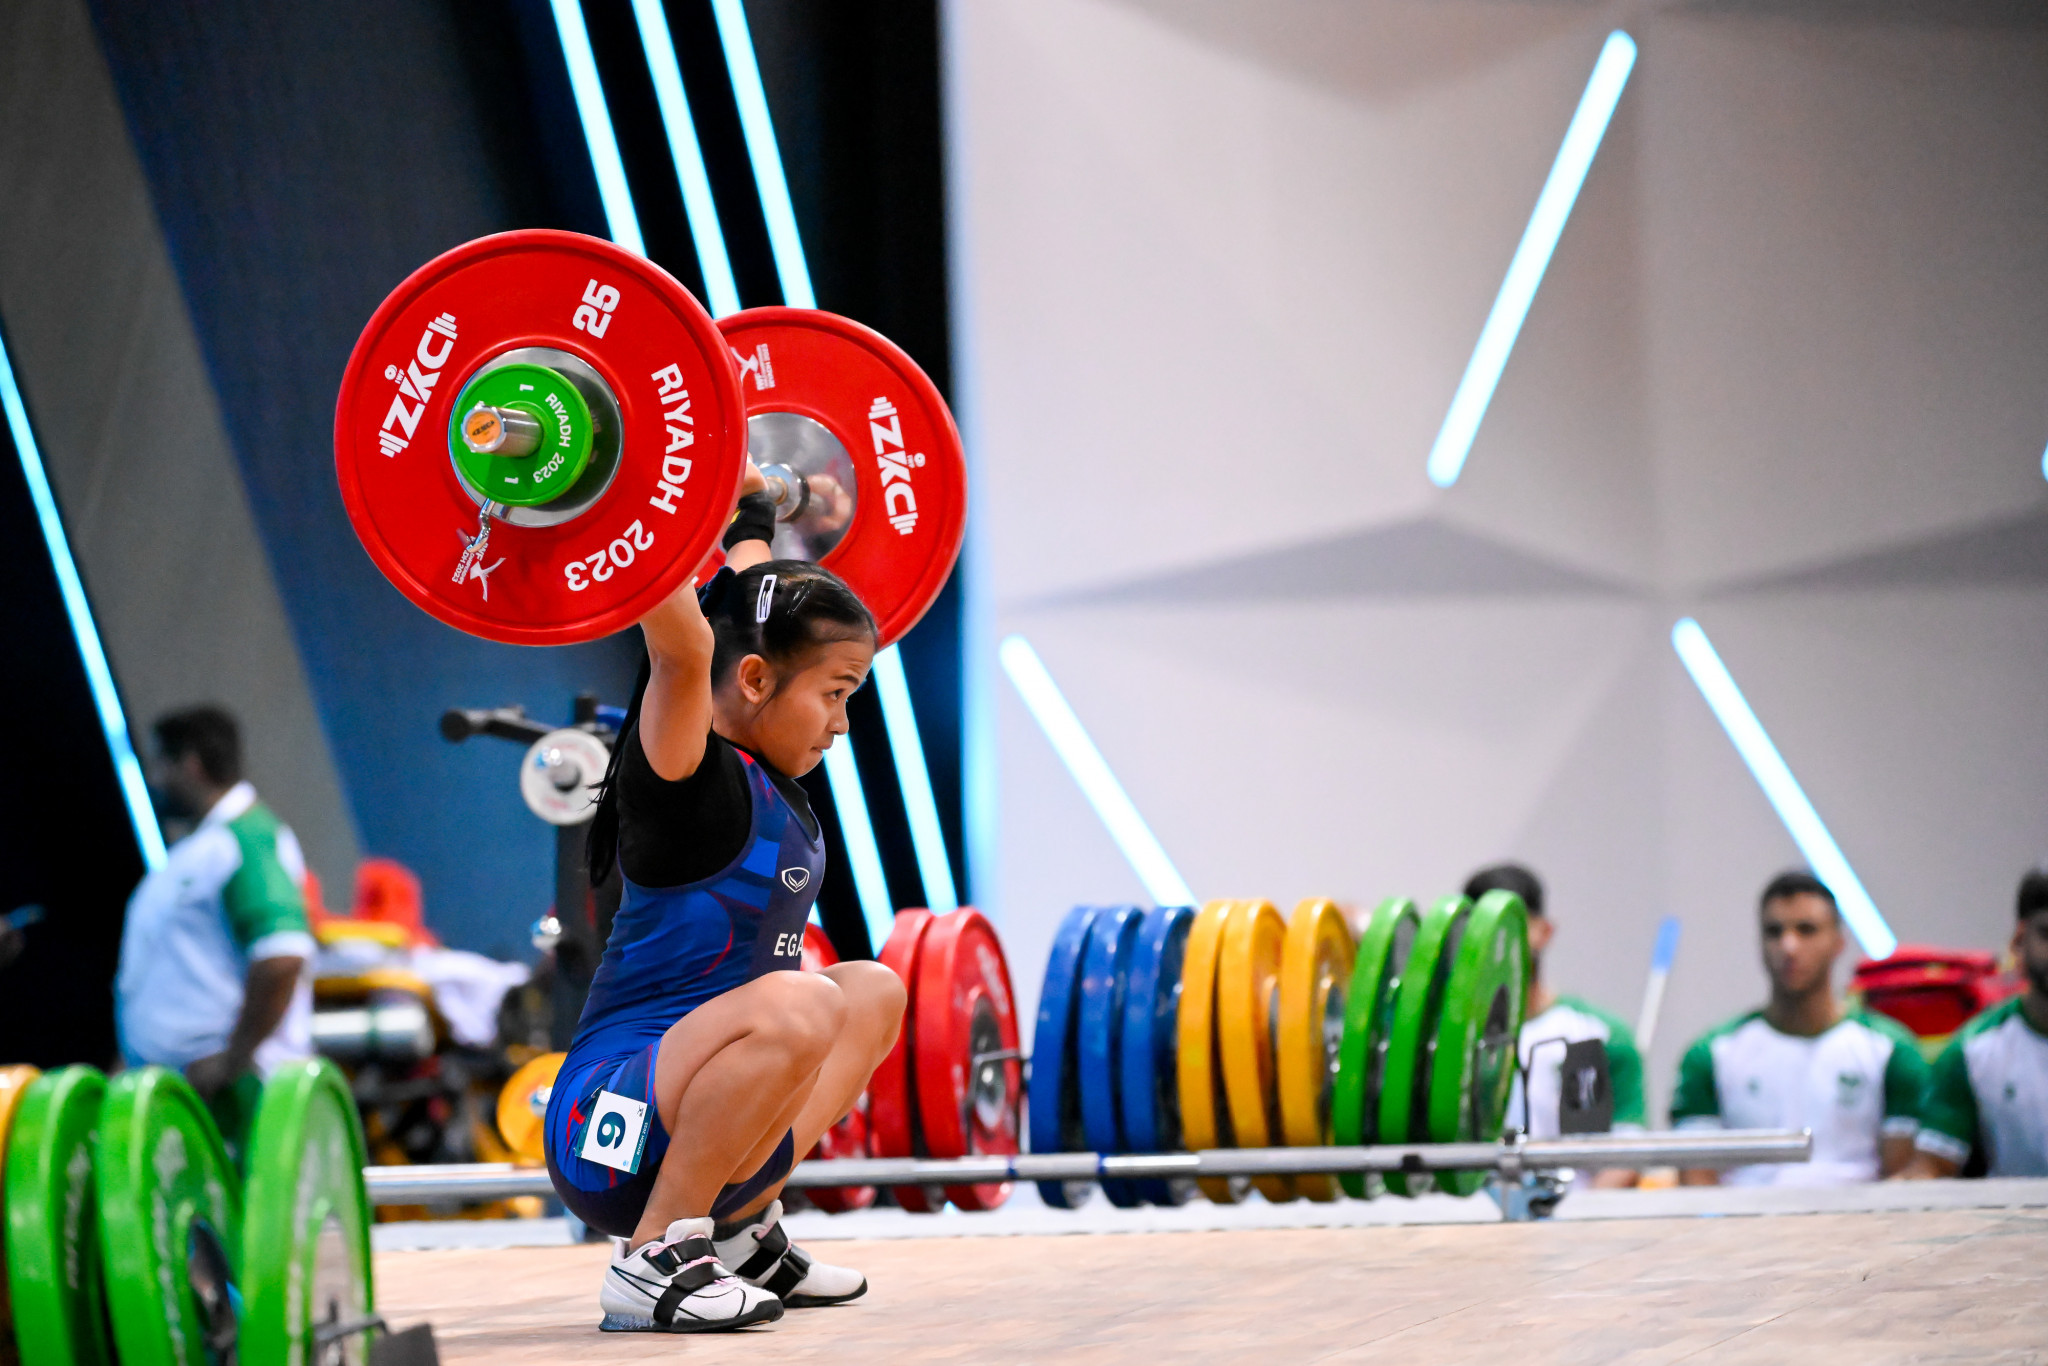 Siriwimon Pramangkhol of Thailand was a dominant winner of the women's 45kg category in Riyadh ©IWF